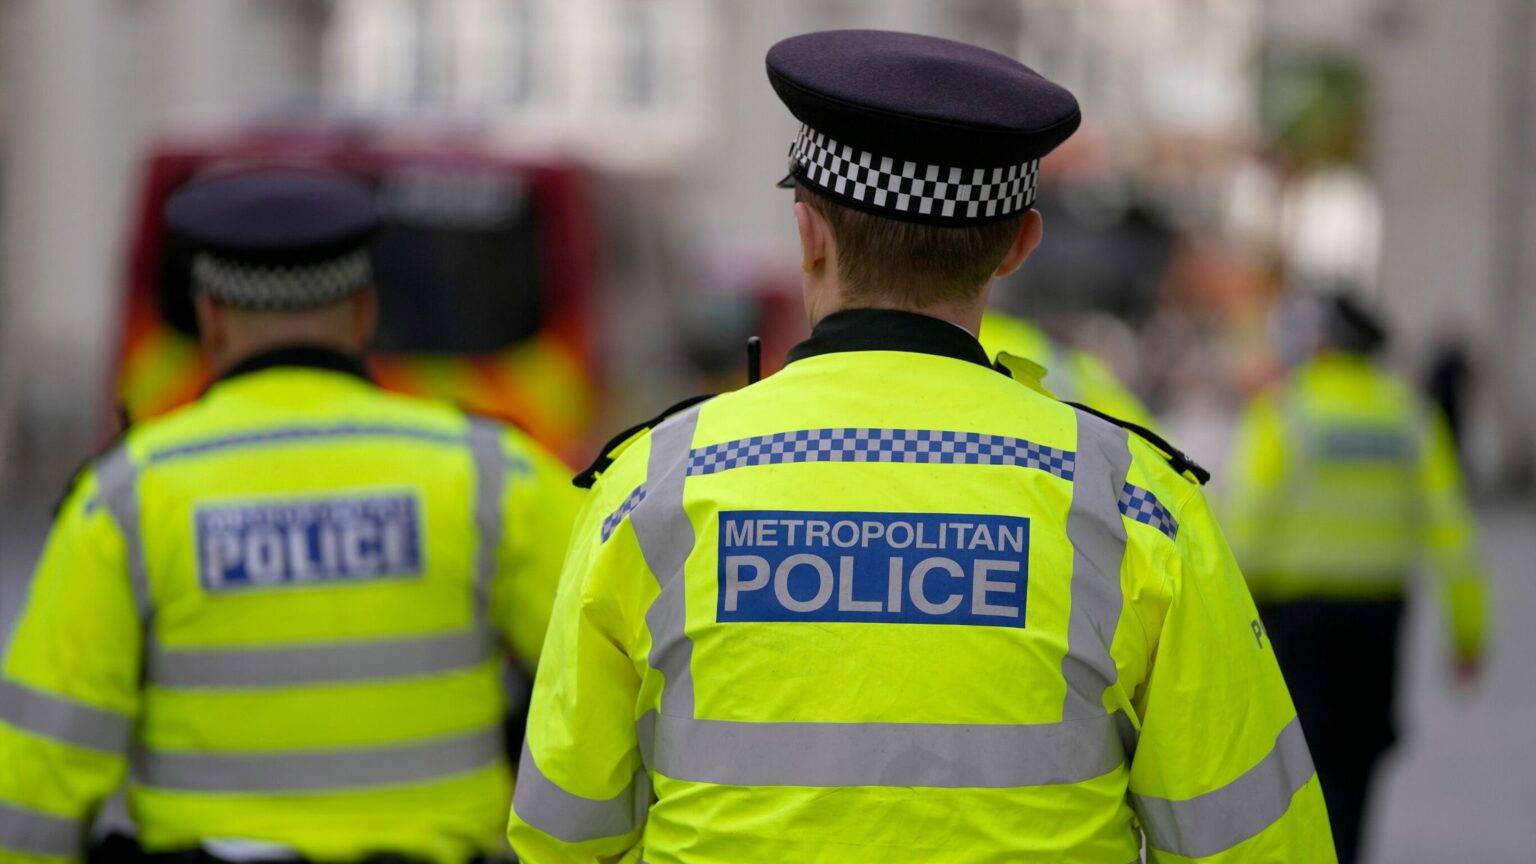 1,000 Met Police officers suspended or on restricted duties